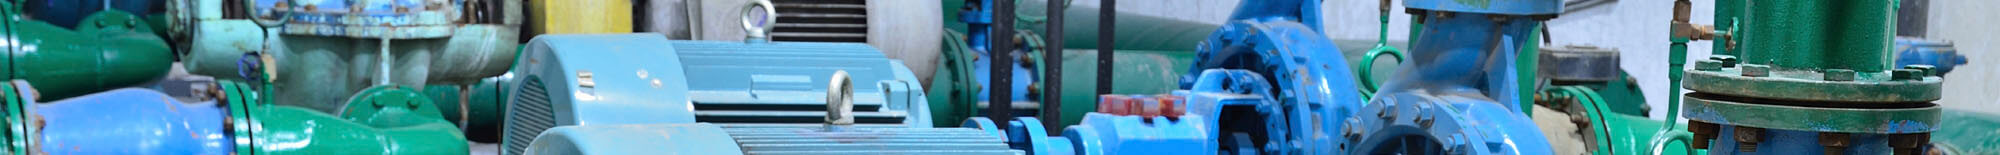 High Pressure Pumps | Industrial Pump Repair & Service